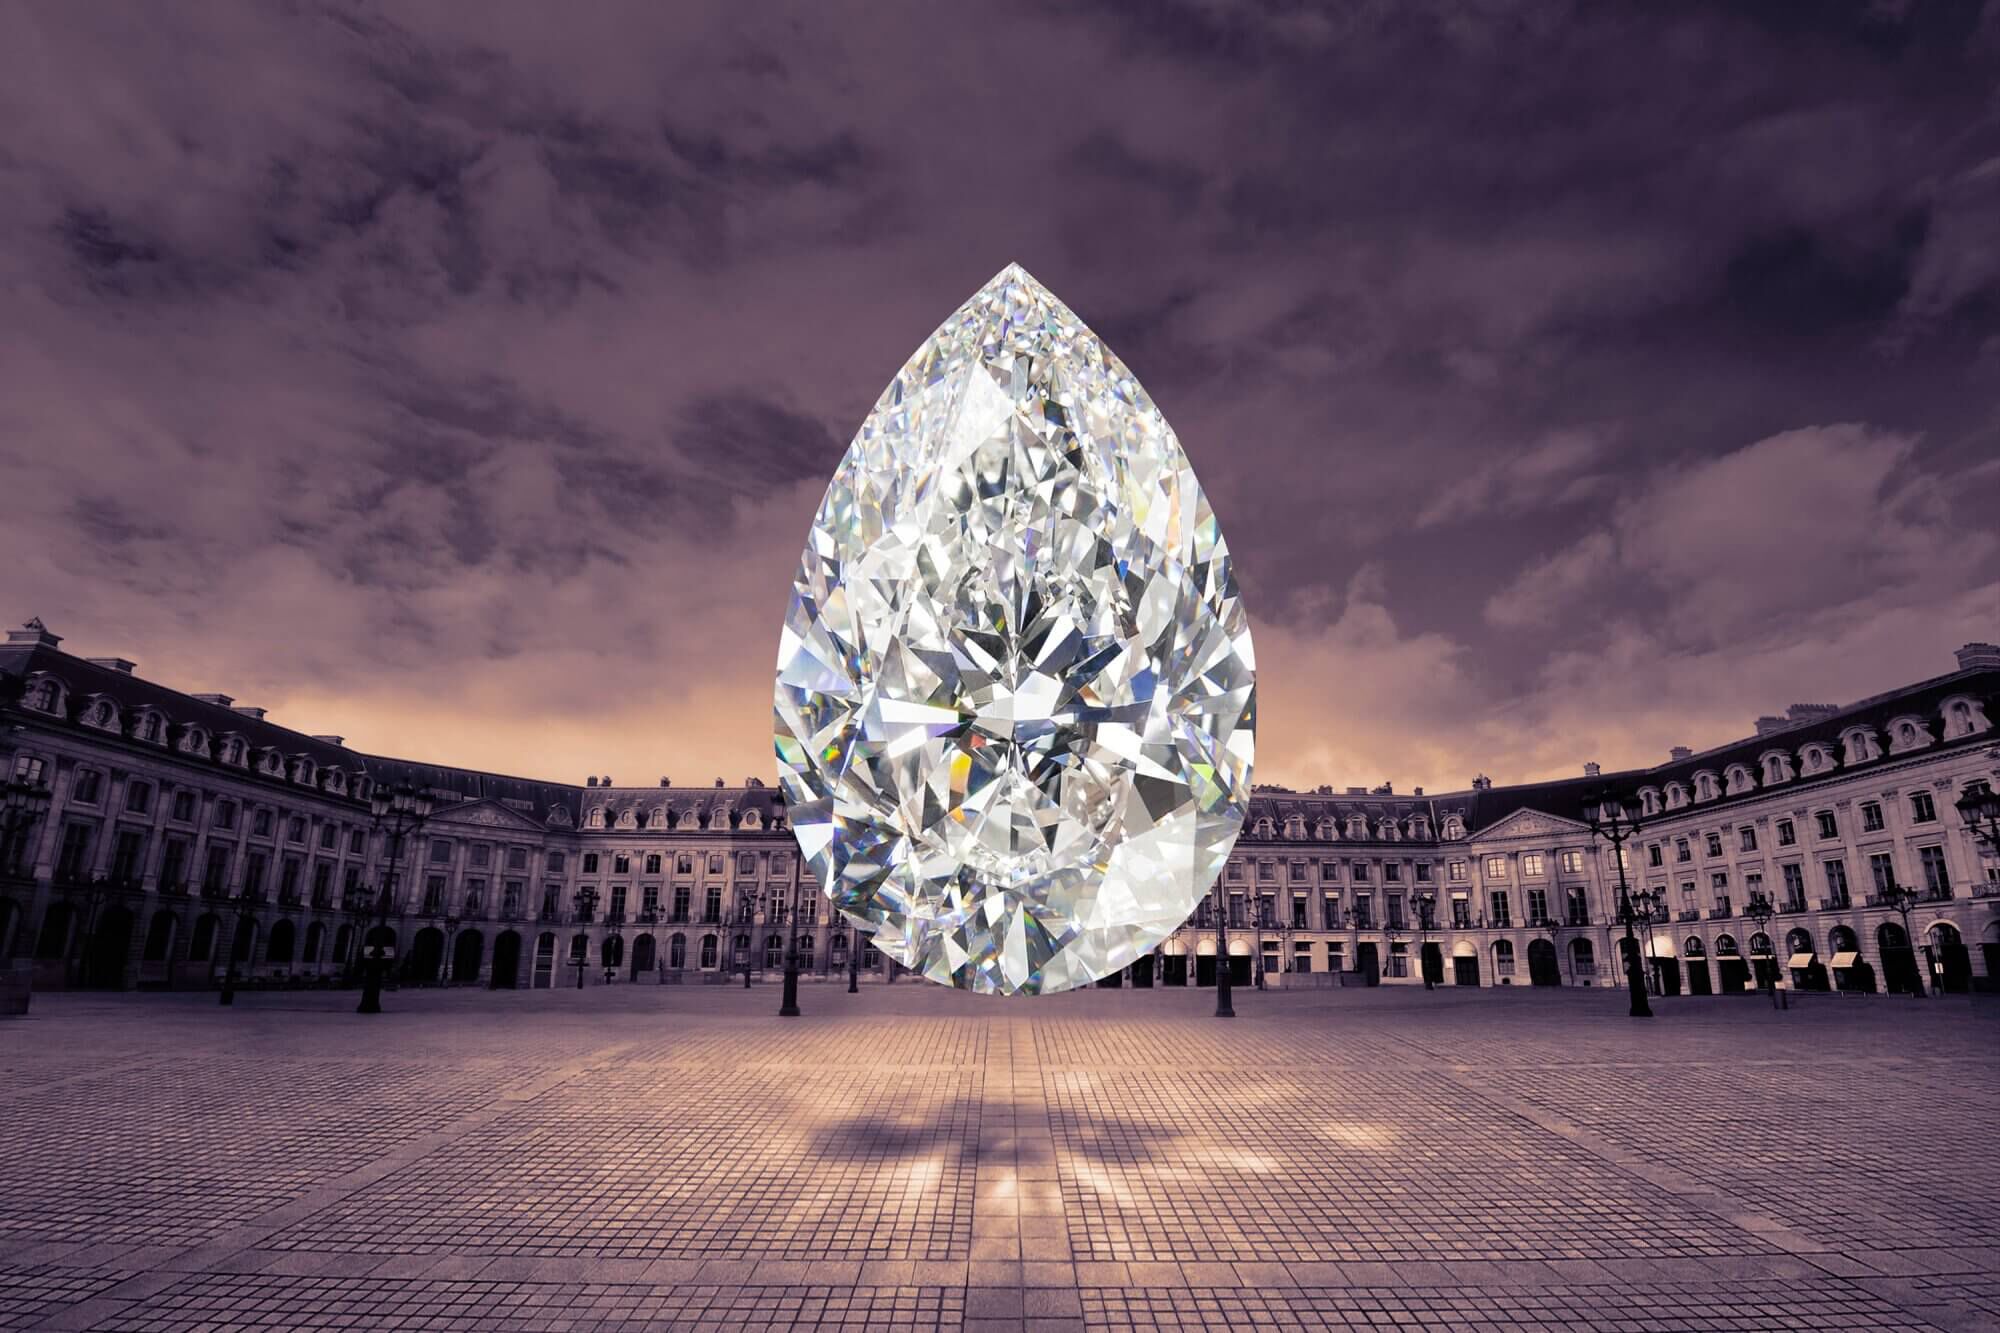 The Graff Vendôme pear shape famous diamond with the Place Vendôme in Paris, France as the background